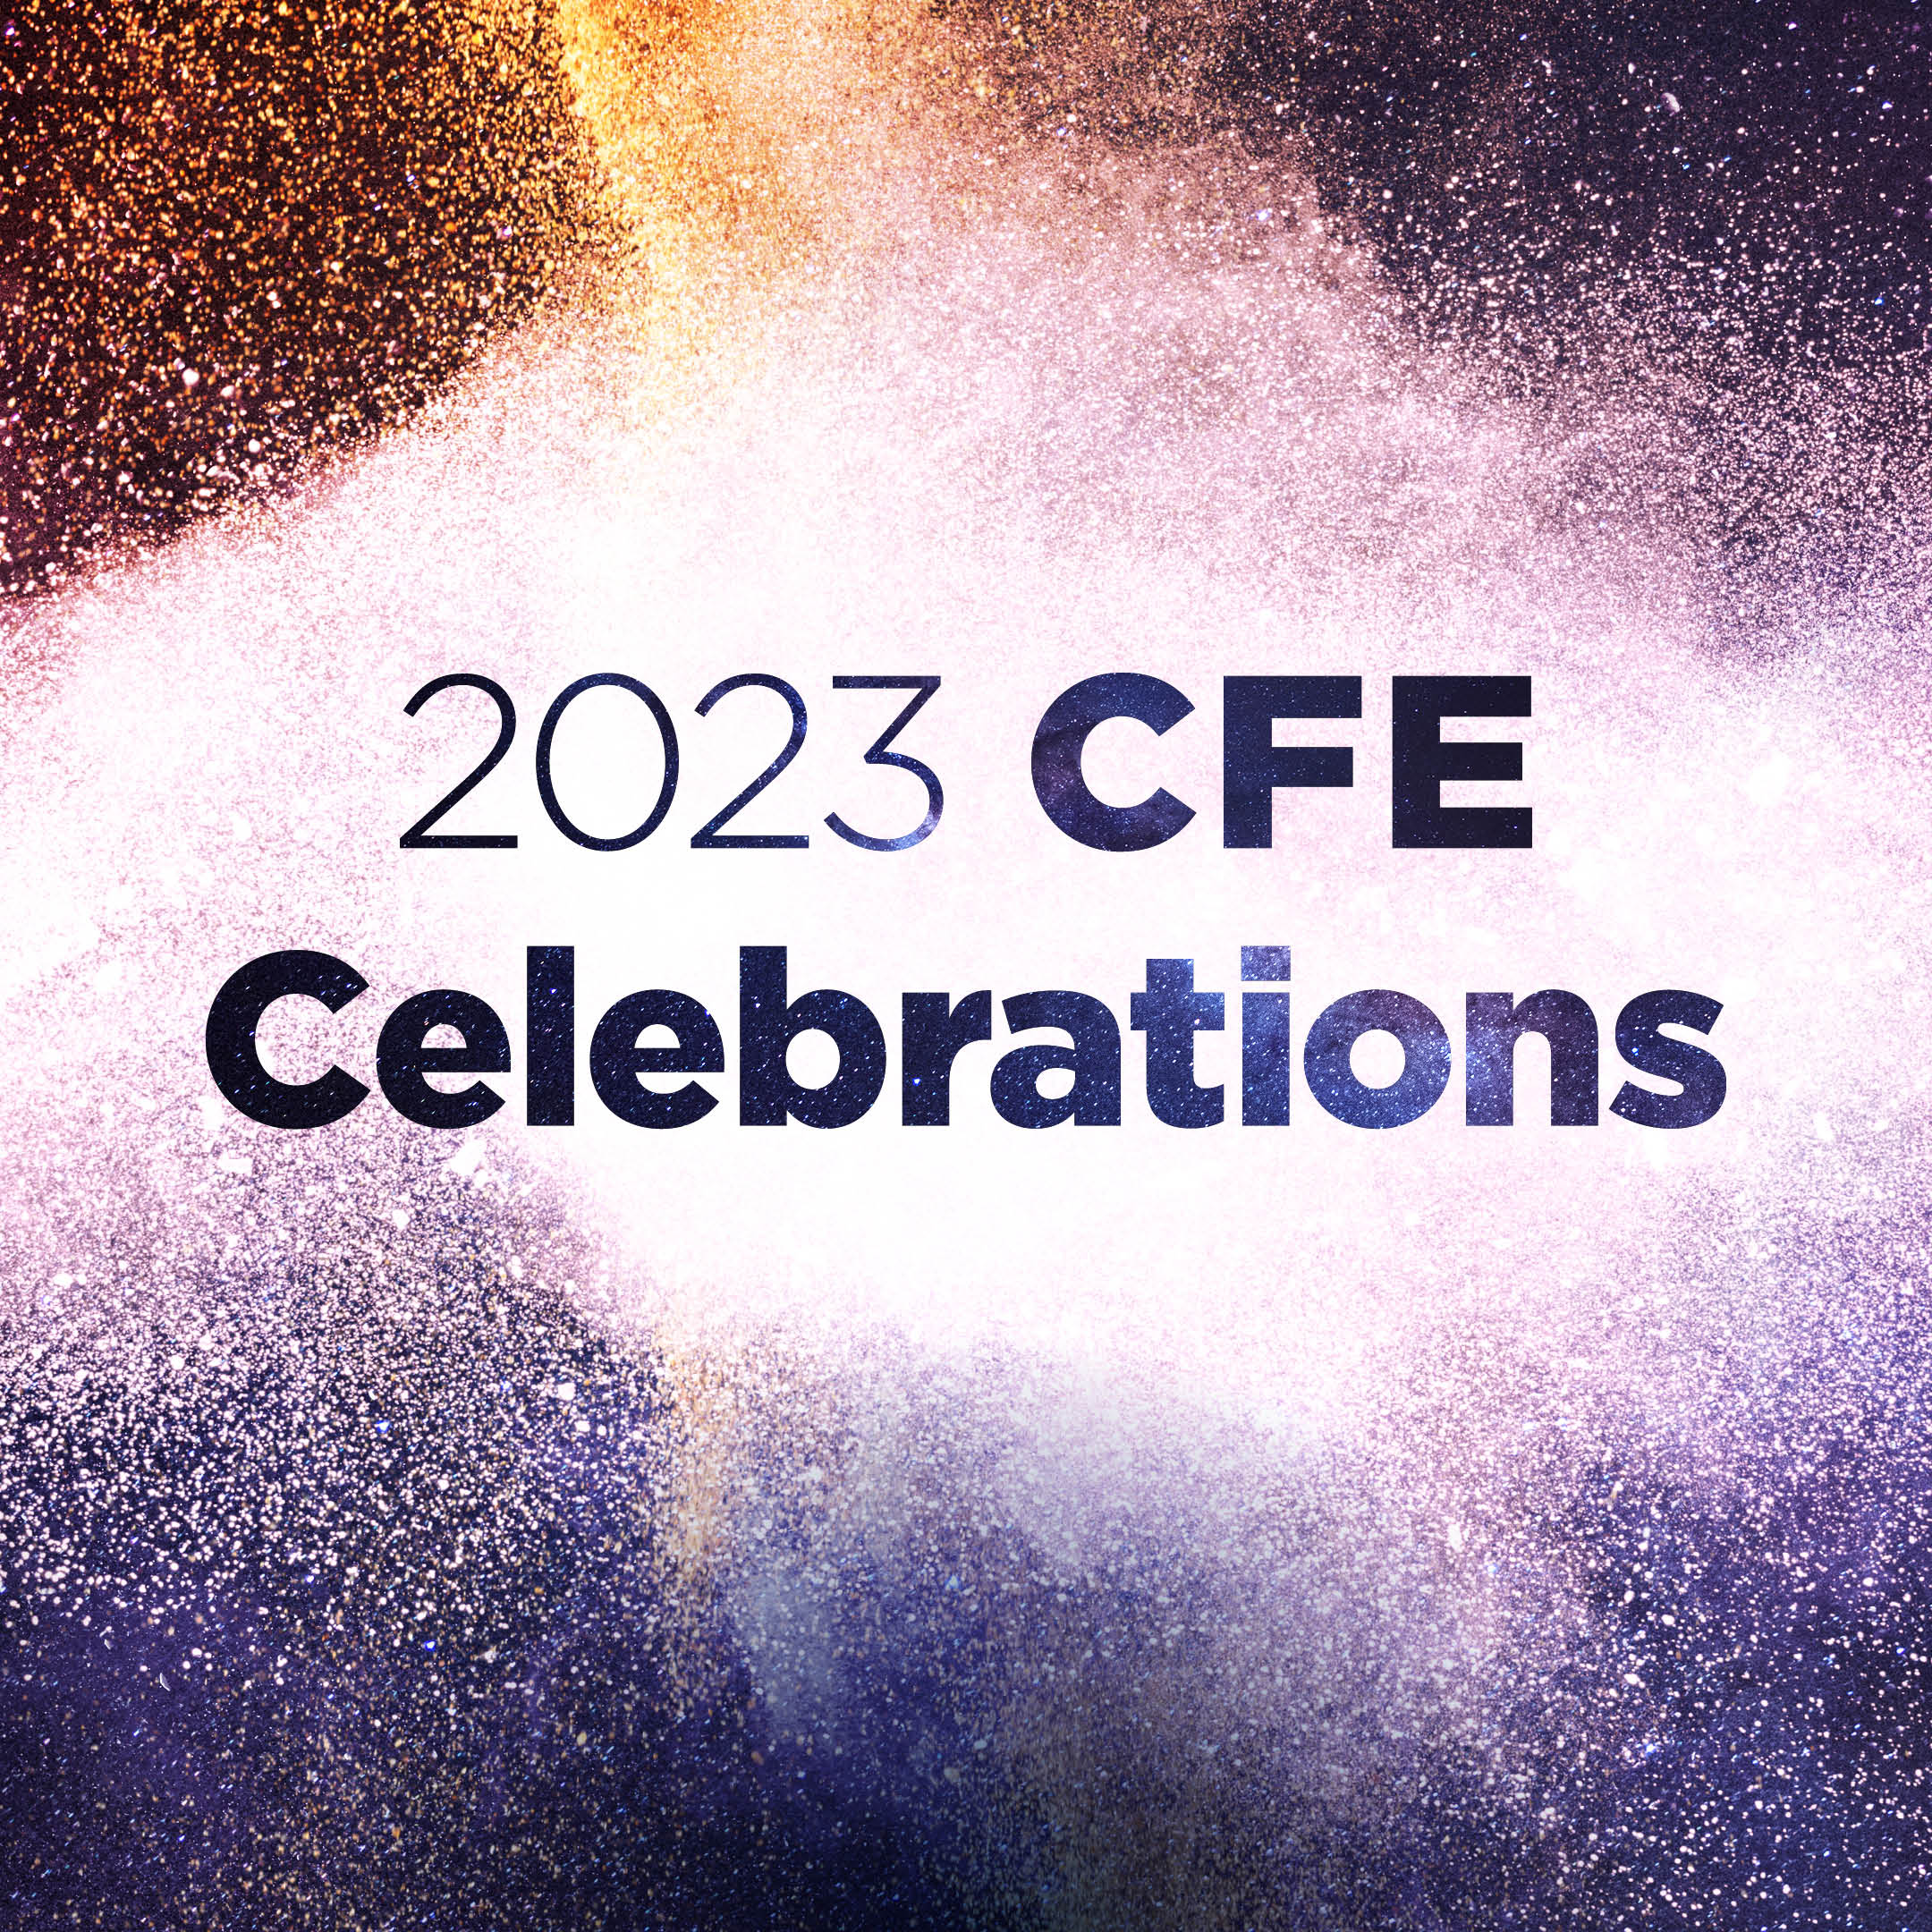 2023 CFE Celebrations image. Image of a celebration with that reads "2023 CFE Celebrations"